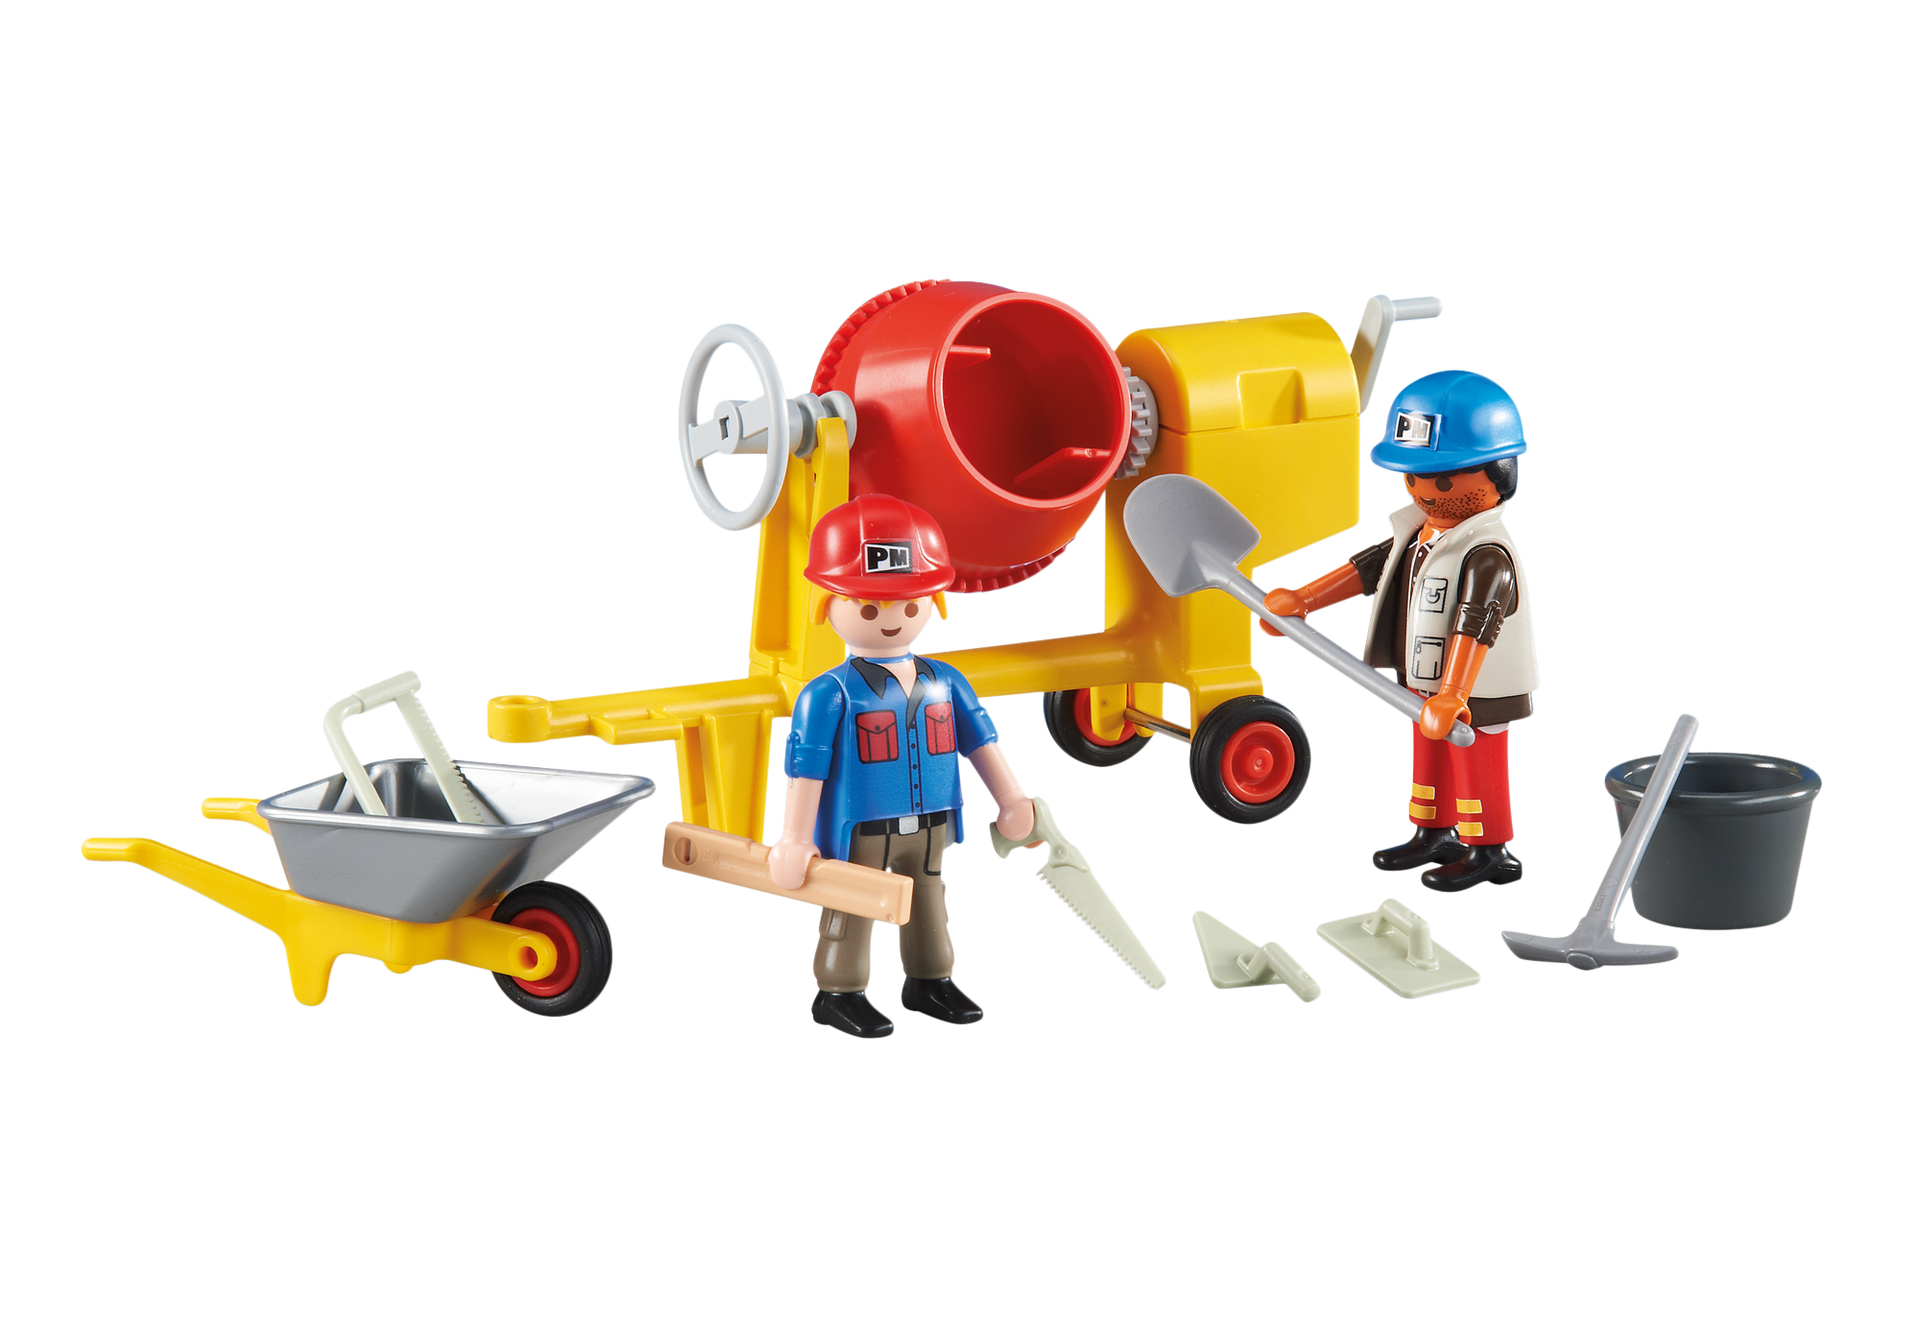 Playmobil TROMMEL Betonmischer Zementmischer Baustelle Bauarbeiter Klicky 3207 